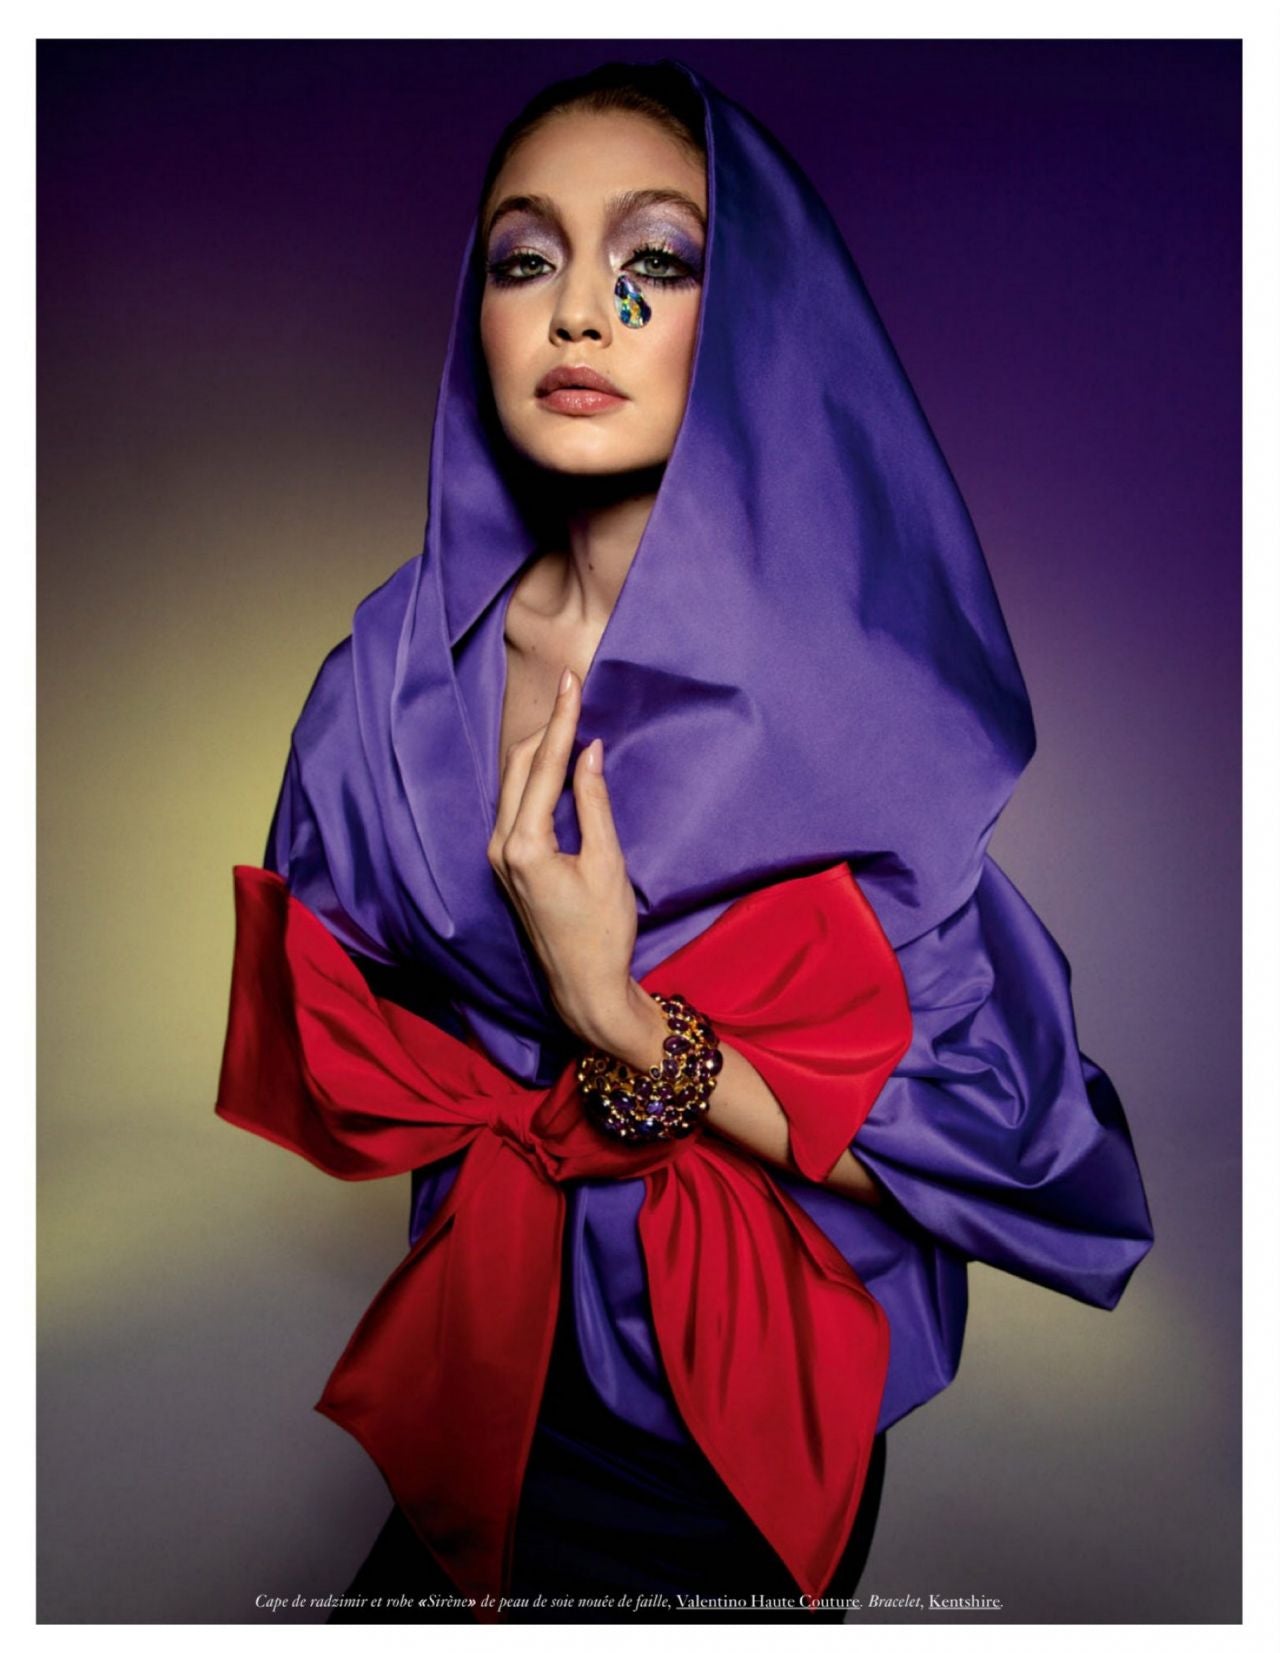 Gigi Hadid wearing Kentshire costume jewelry in Vogue